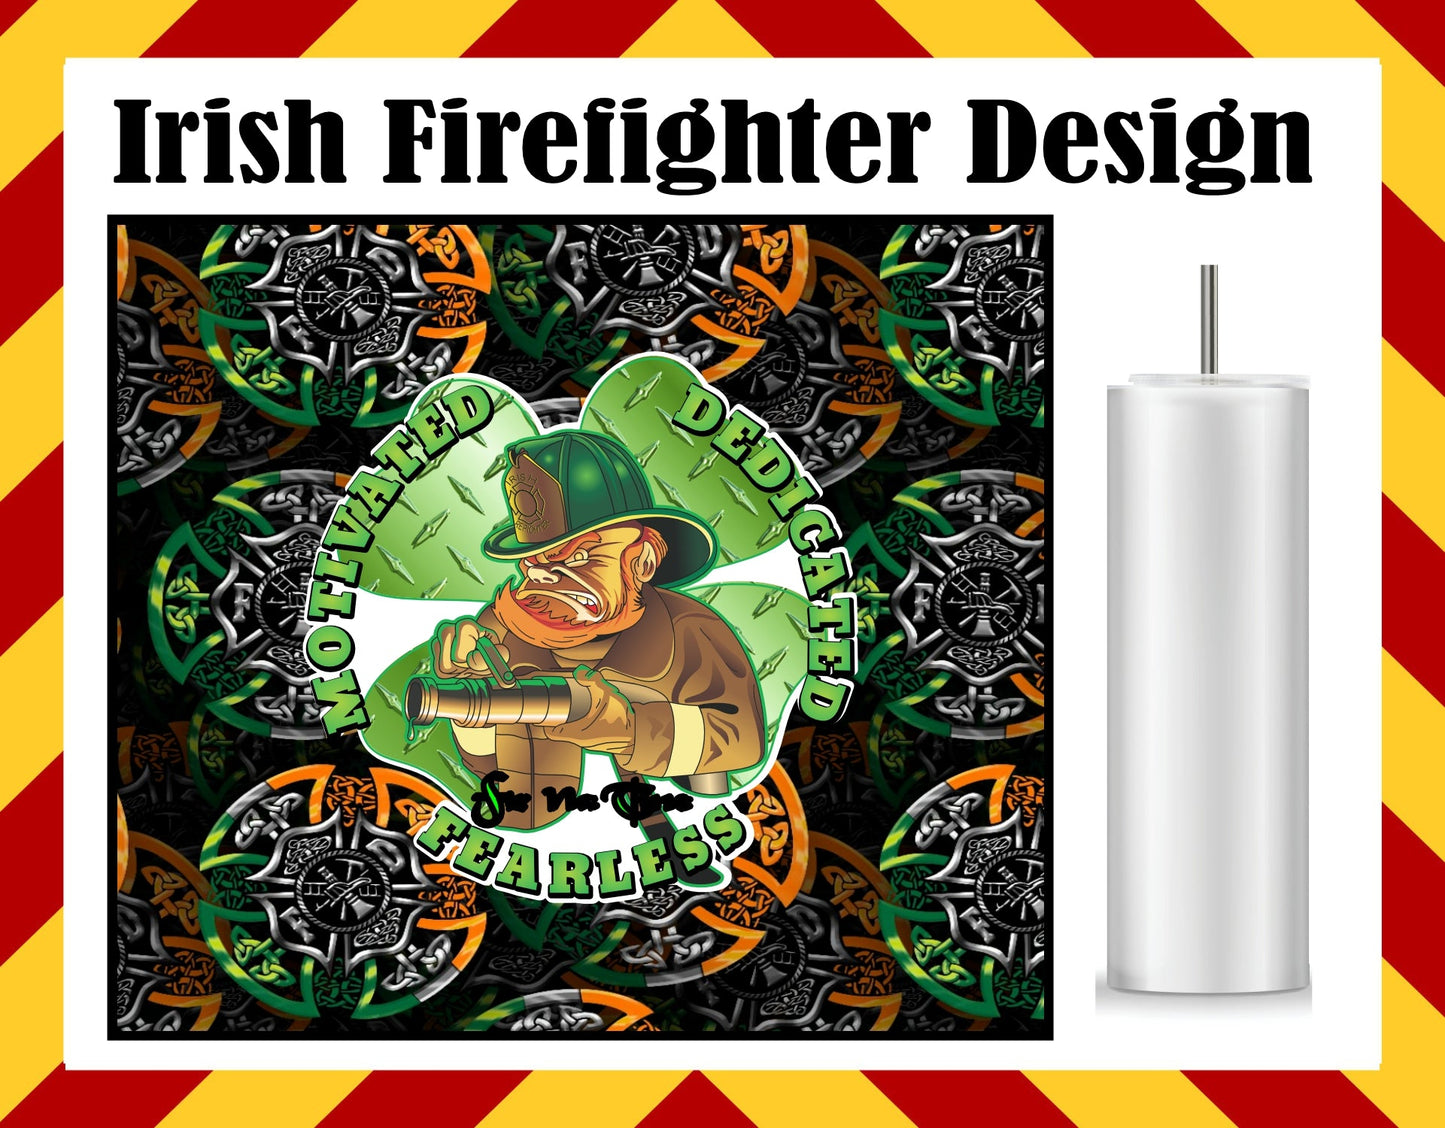 Drink Water Cup - Irish Firefighter Design